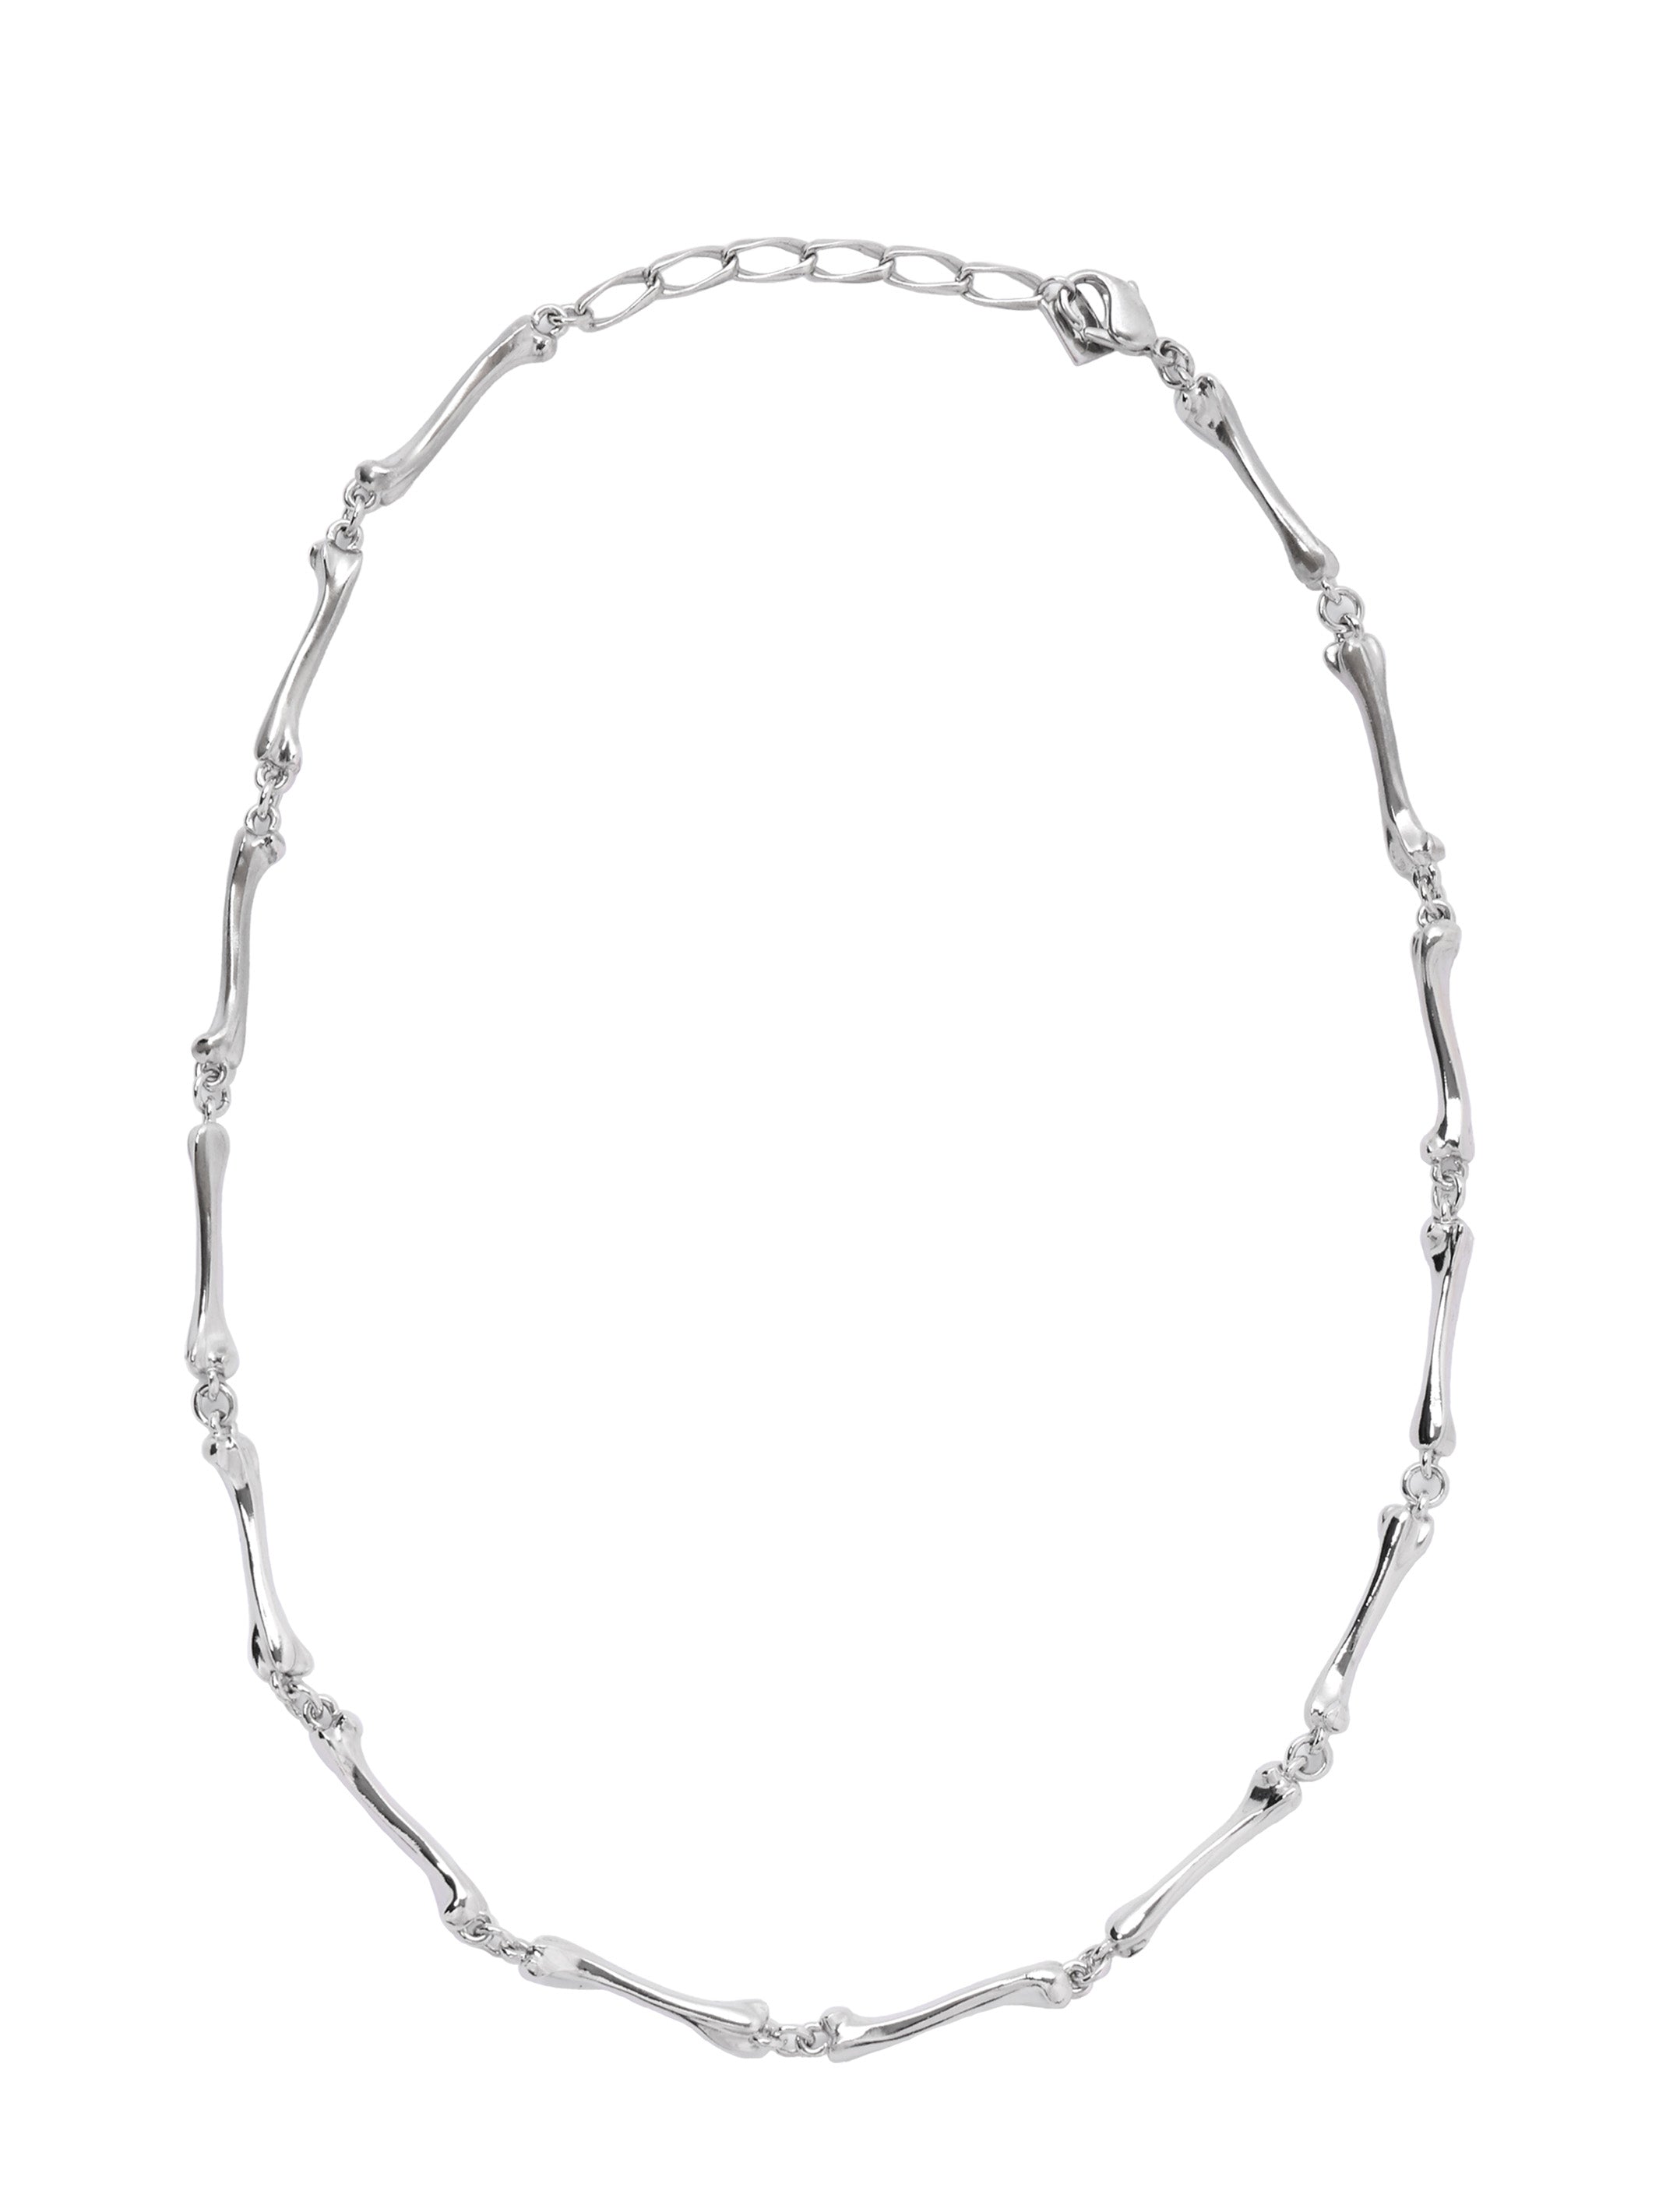 Bone connected short necklace silver925 – JOHN LAWRENCE SULLIVAN